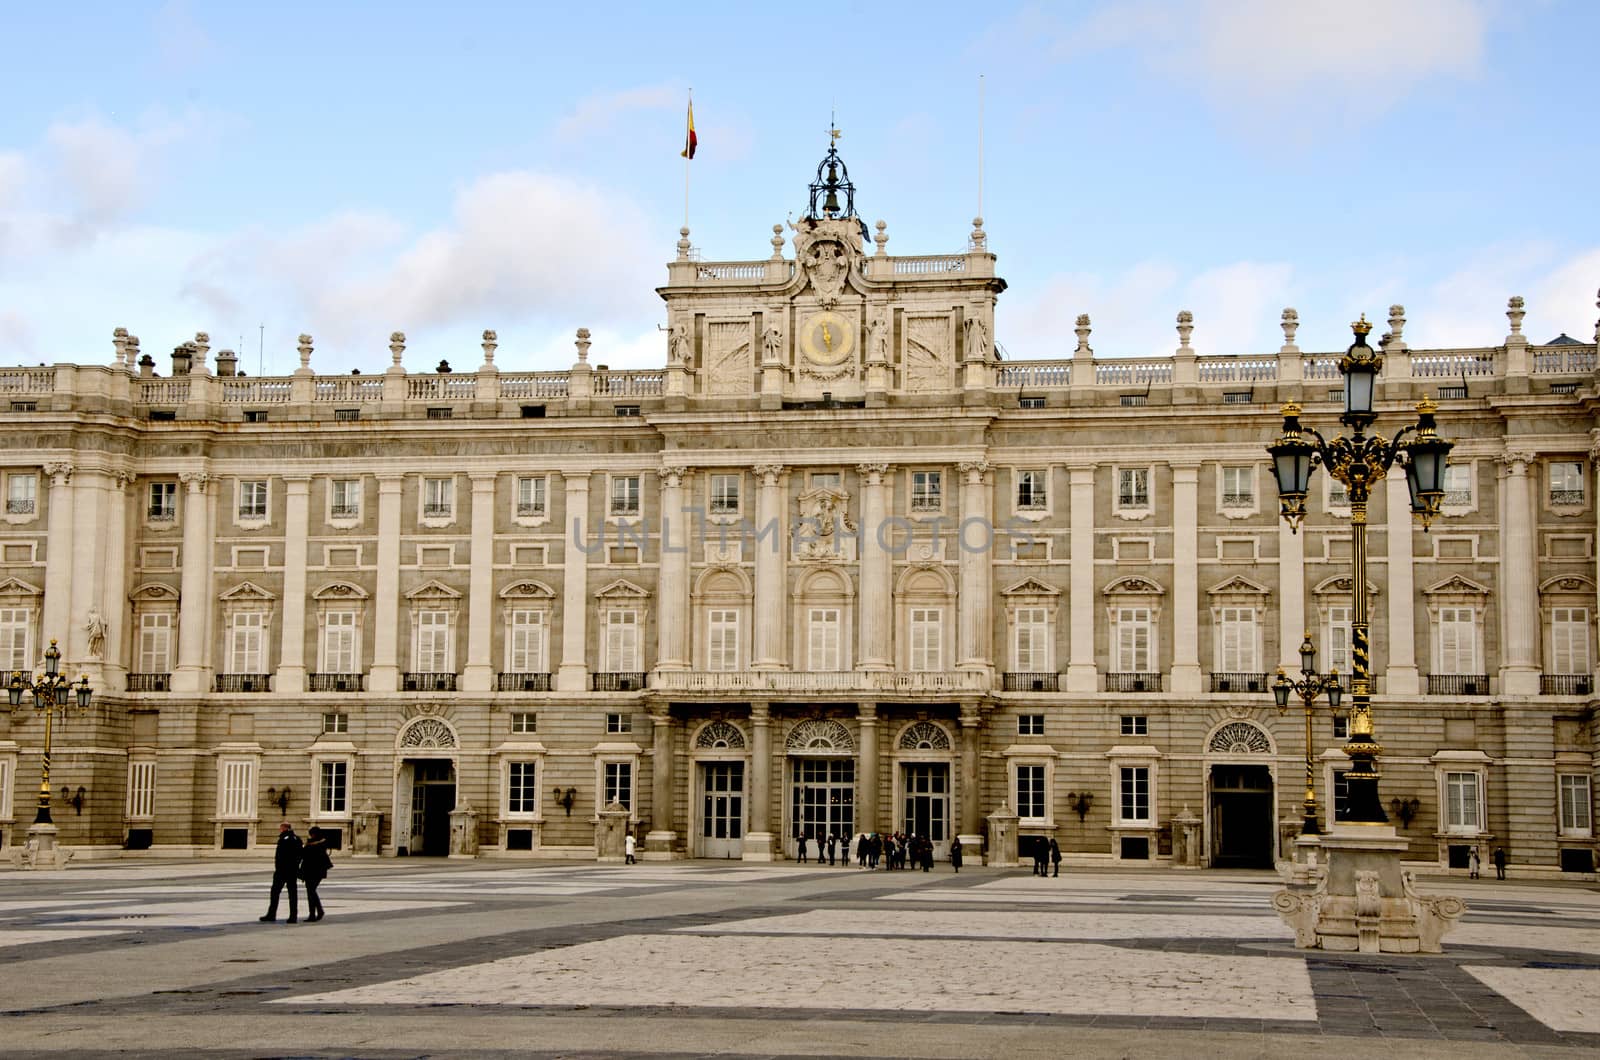 Royal Palace, Madrid 